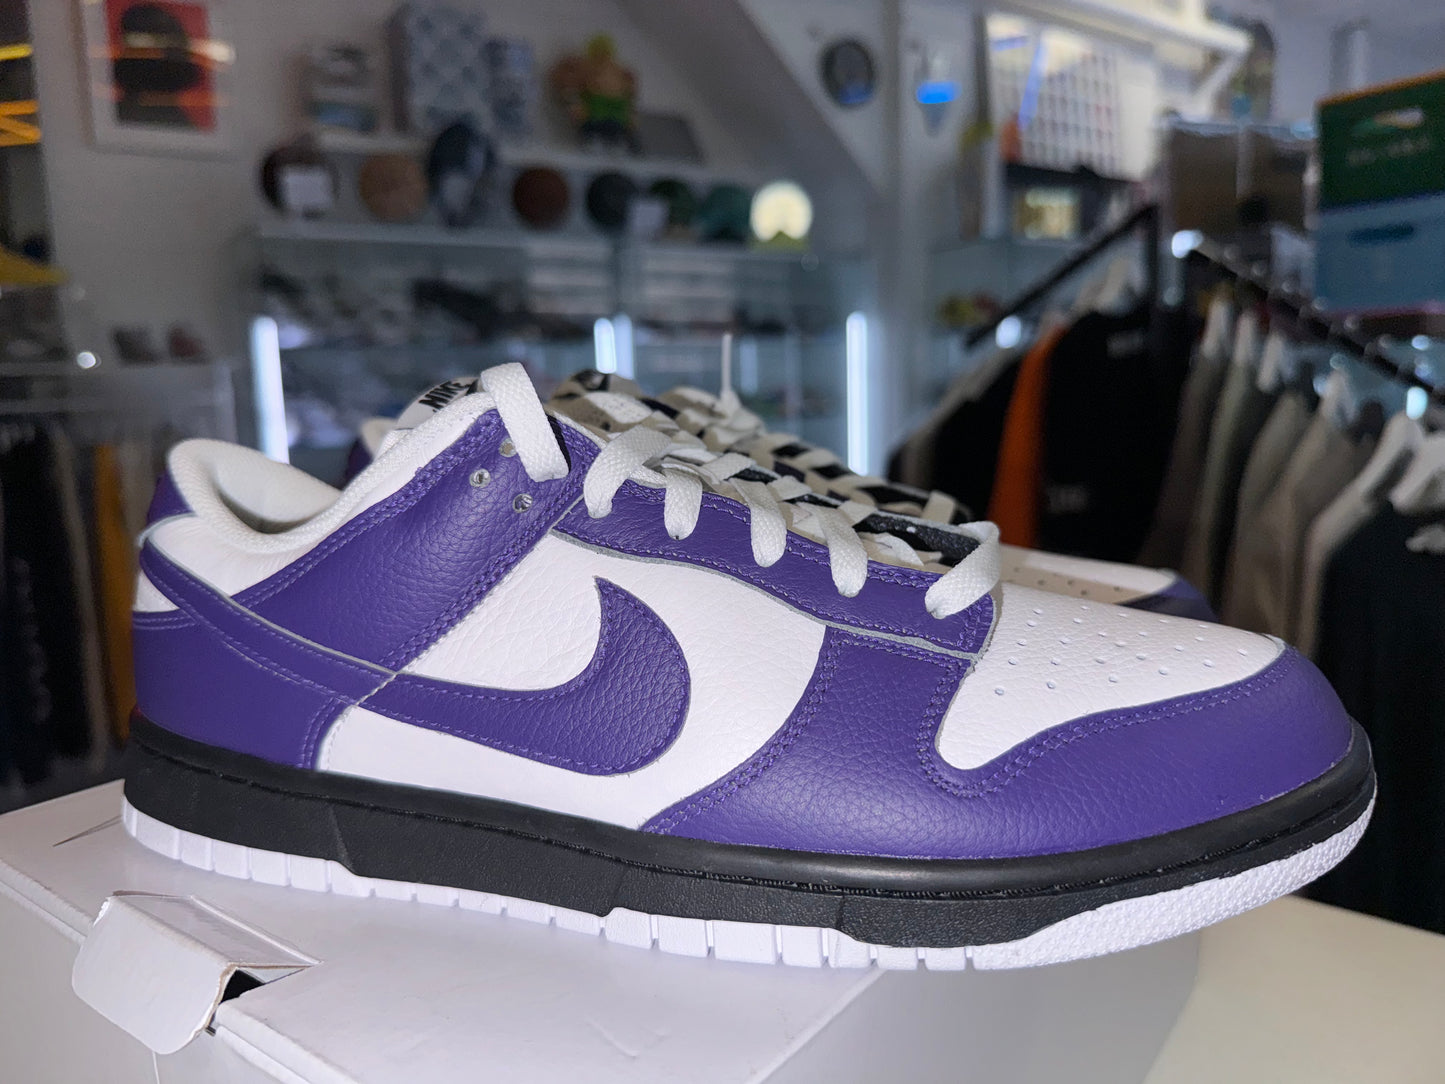 Nike Dunk ID Purple Black